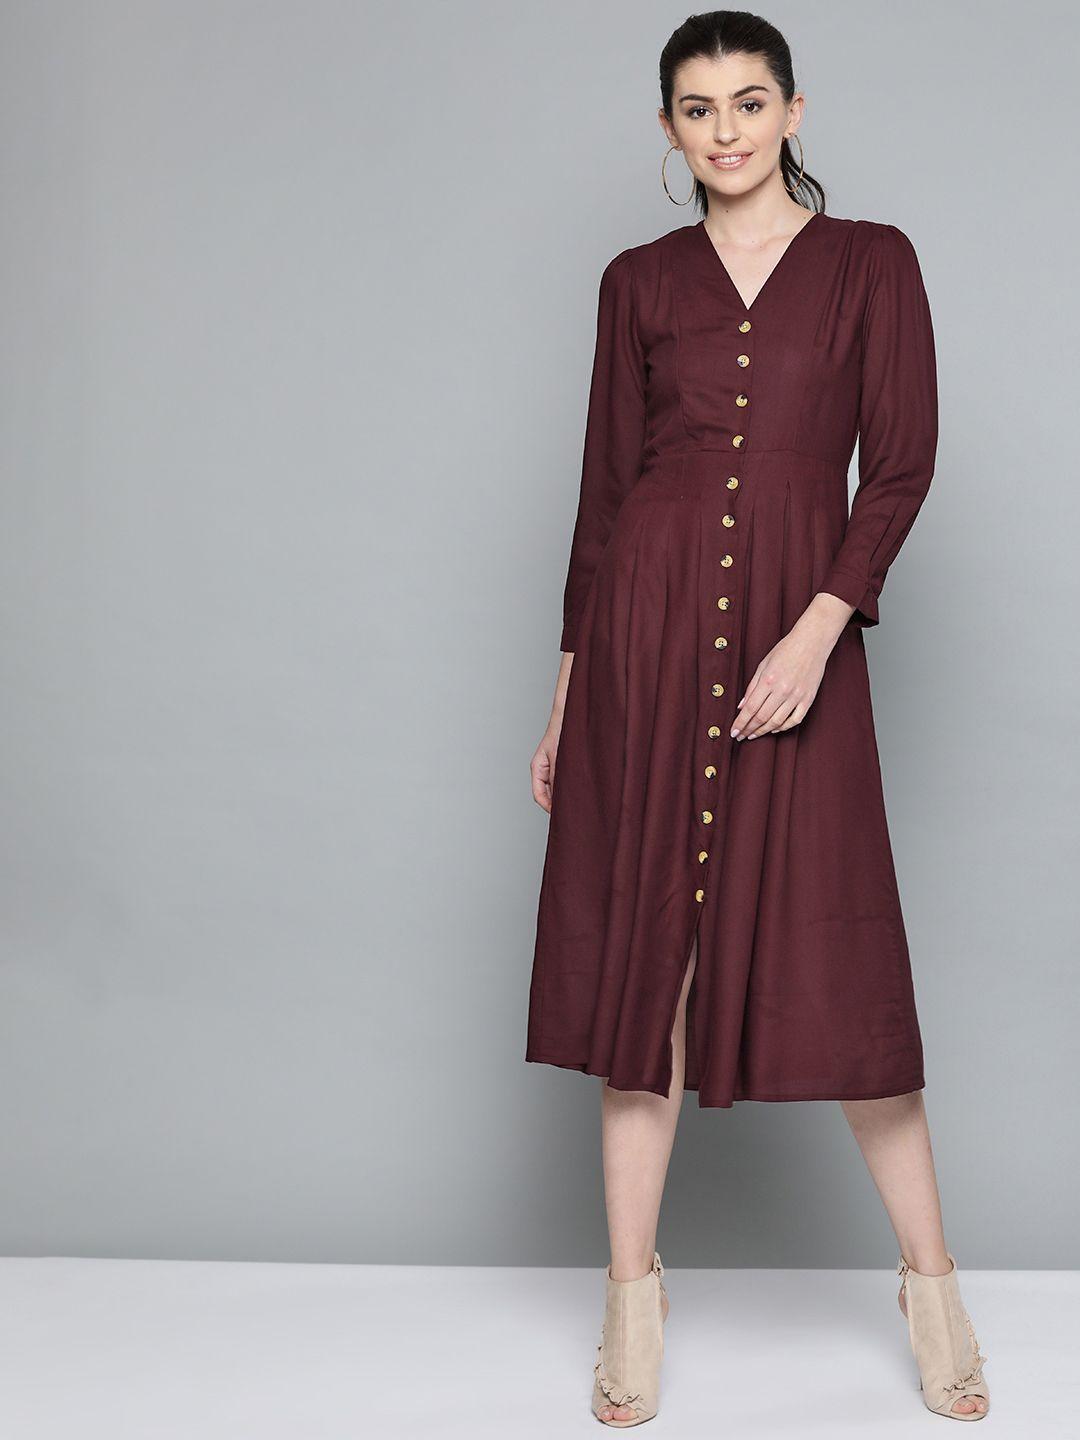 harpa-women-burgundy-solid-a-line-dress